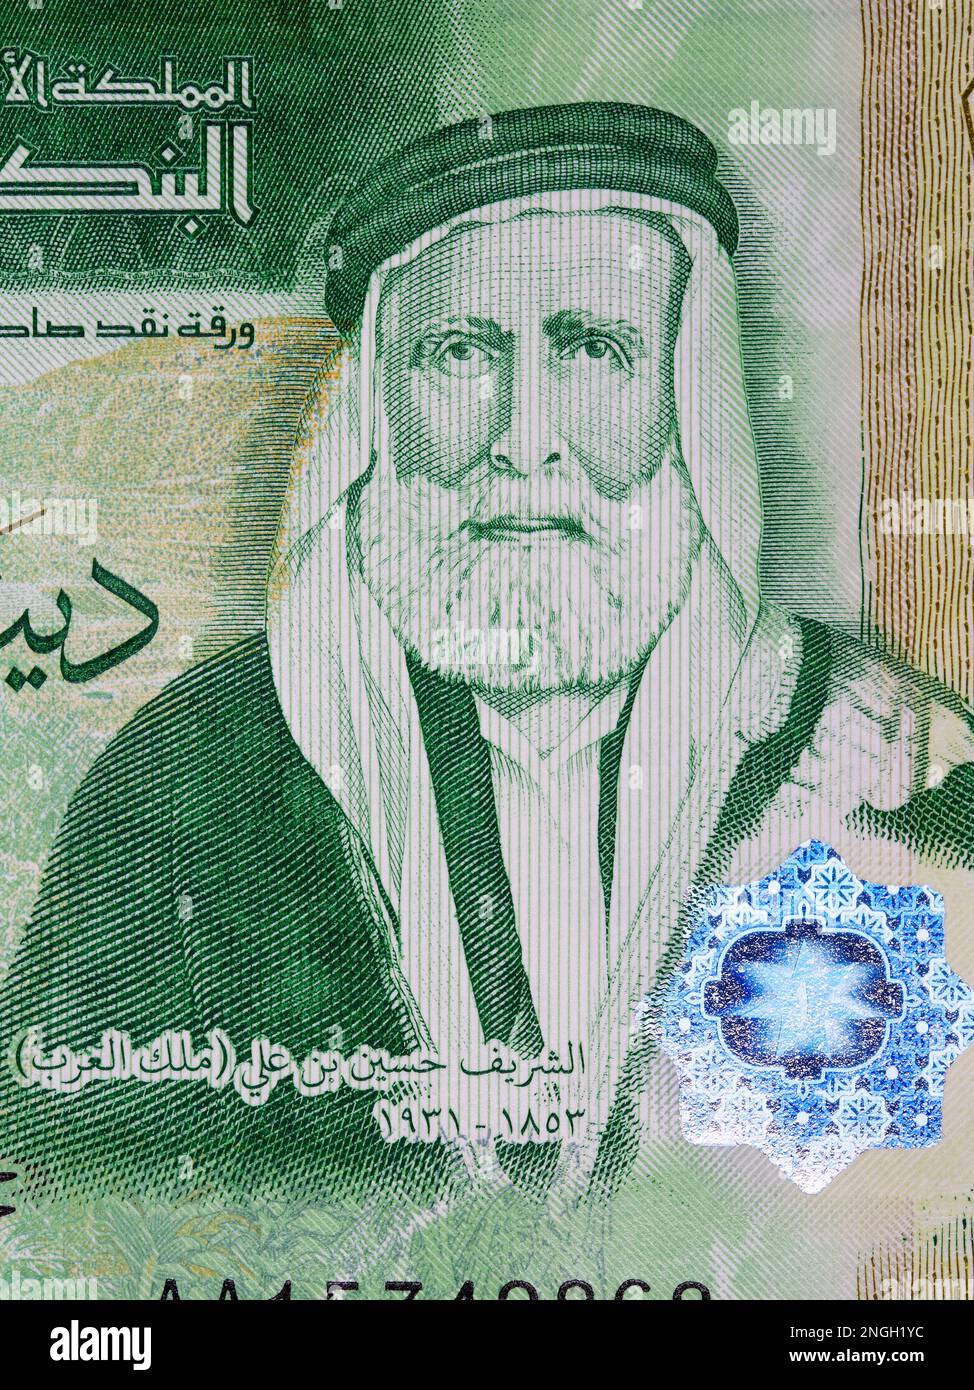 Hussein bin Ali a portrait from Jordanian money - Dinar Stock Photo